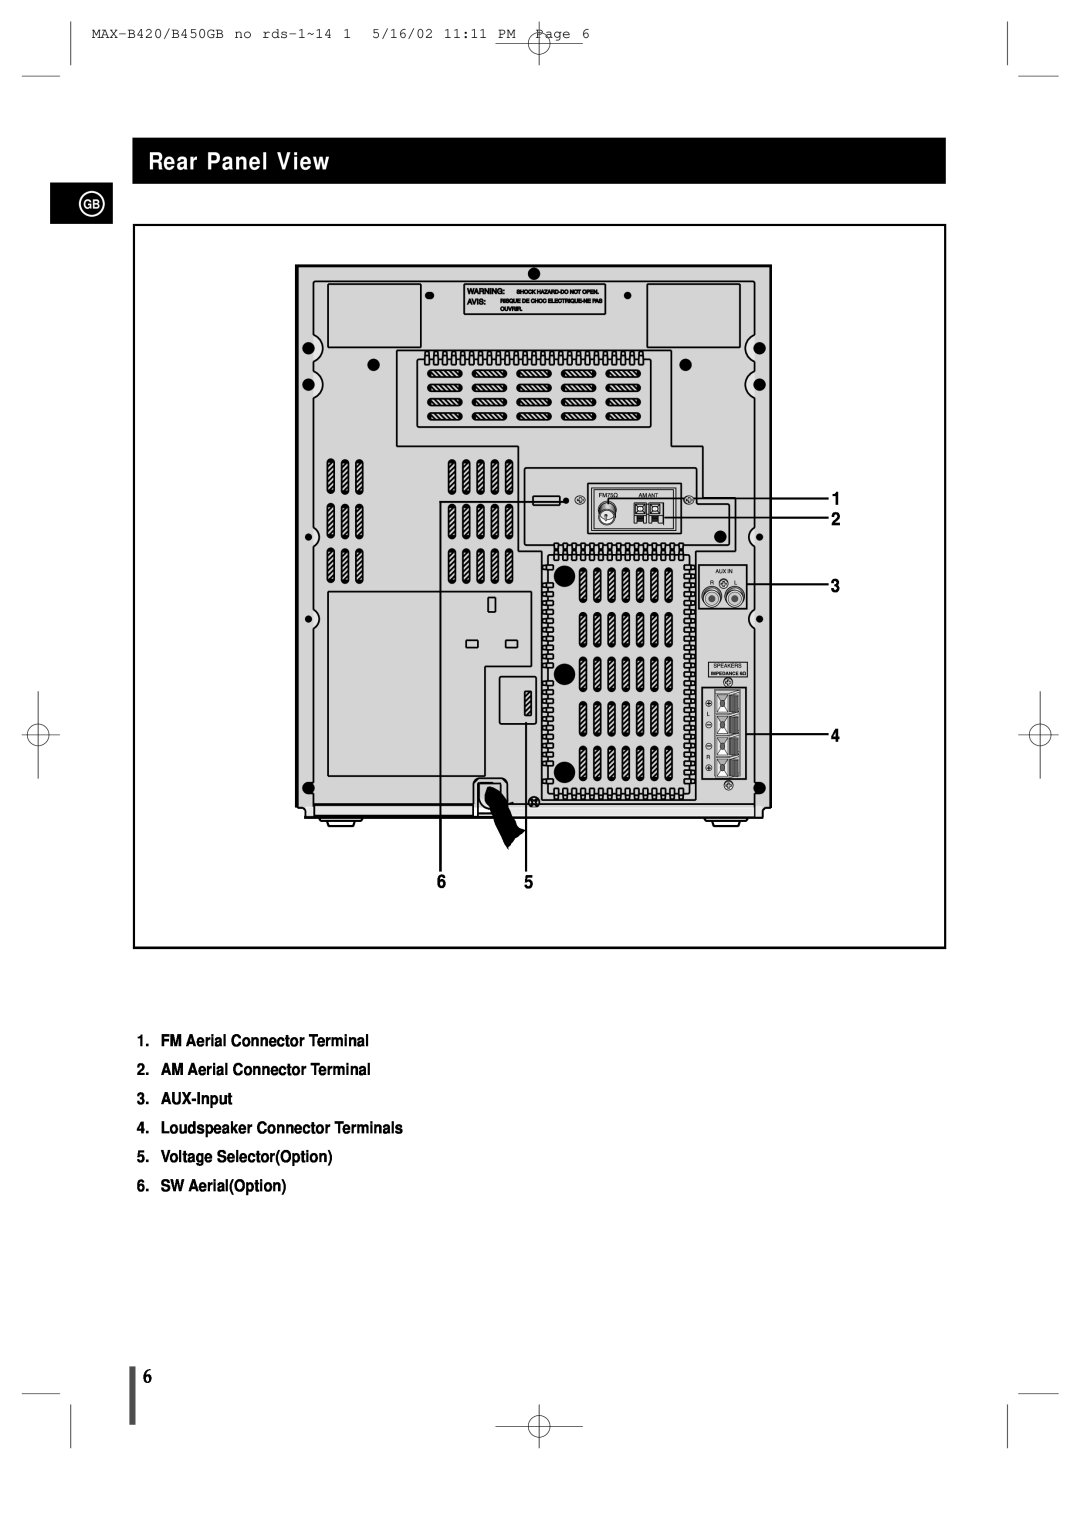 Samsung MAX-B450 instruction manual Rear Panel View, FM Aerial Connector Terminal, AM Aerial Connector Terminal 3.AUX-Input 